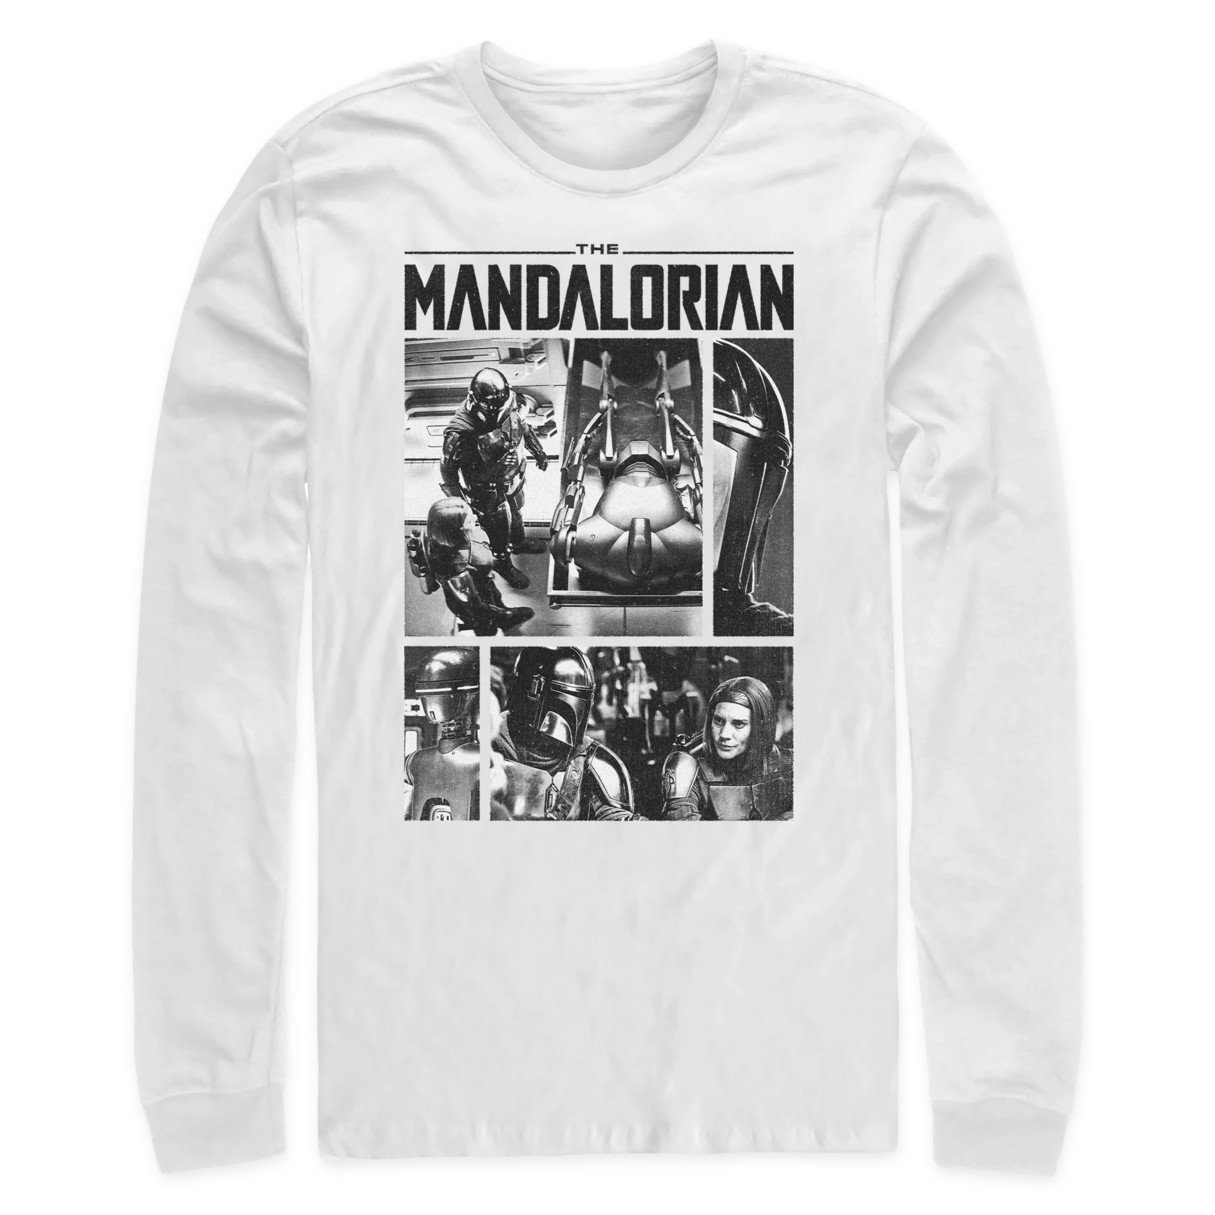 The Mandalorian Long-Sleeve T-Shirt for Adults